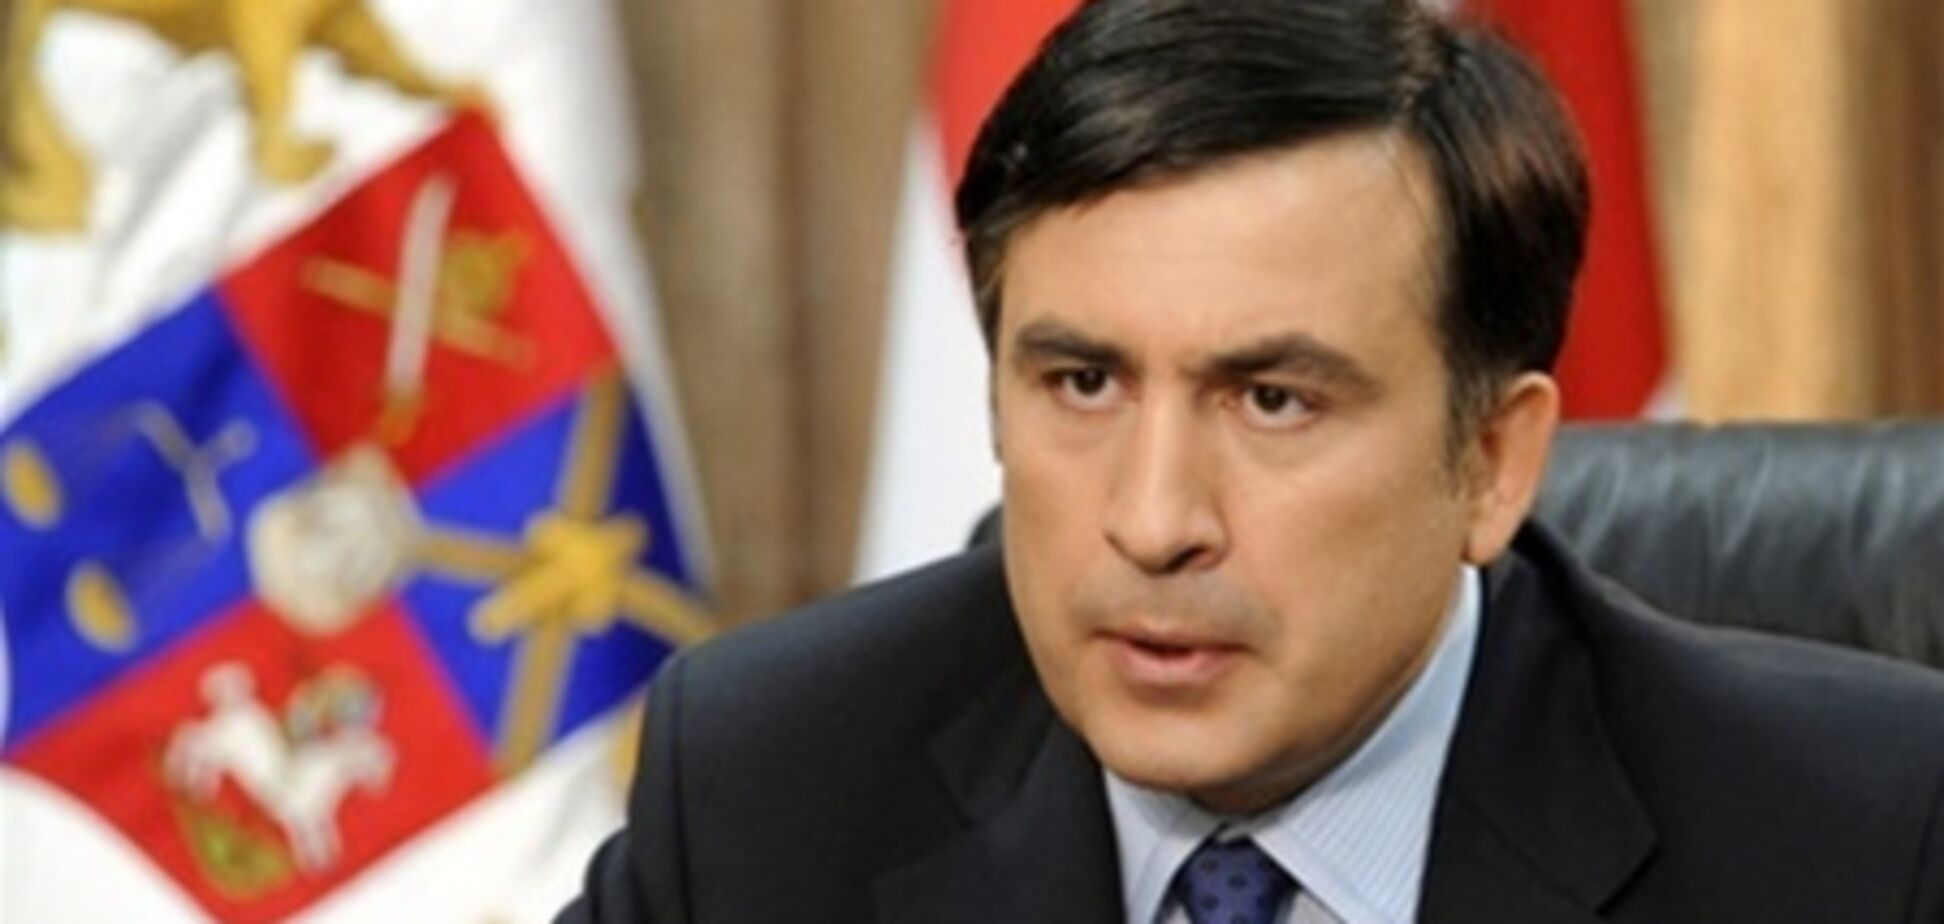 Юристы подали в суд на Саакашвили